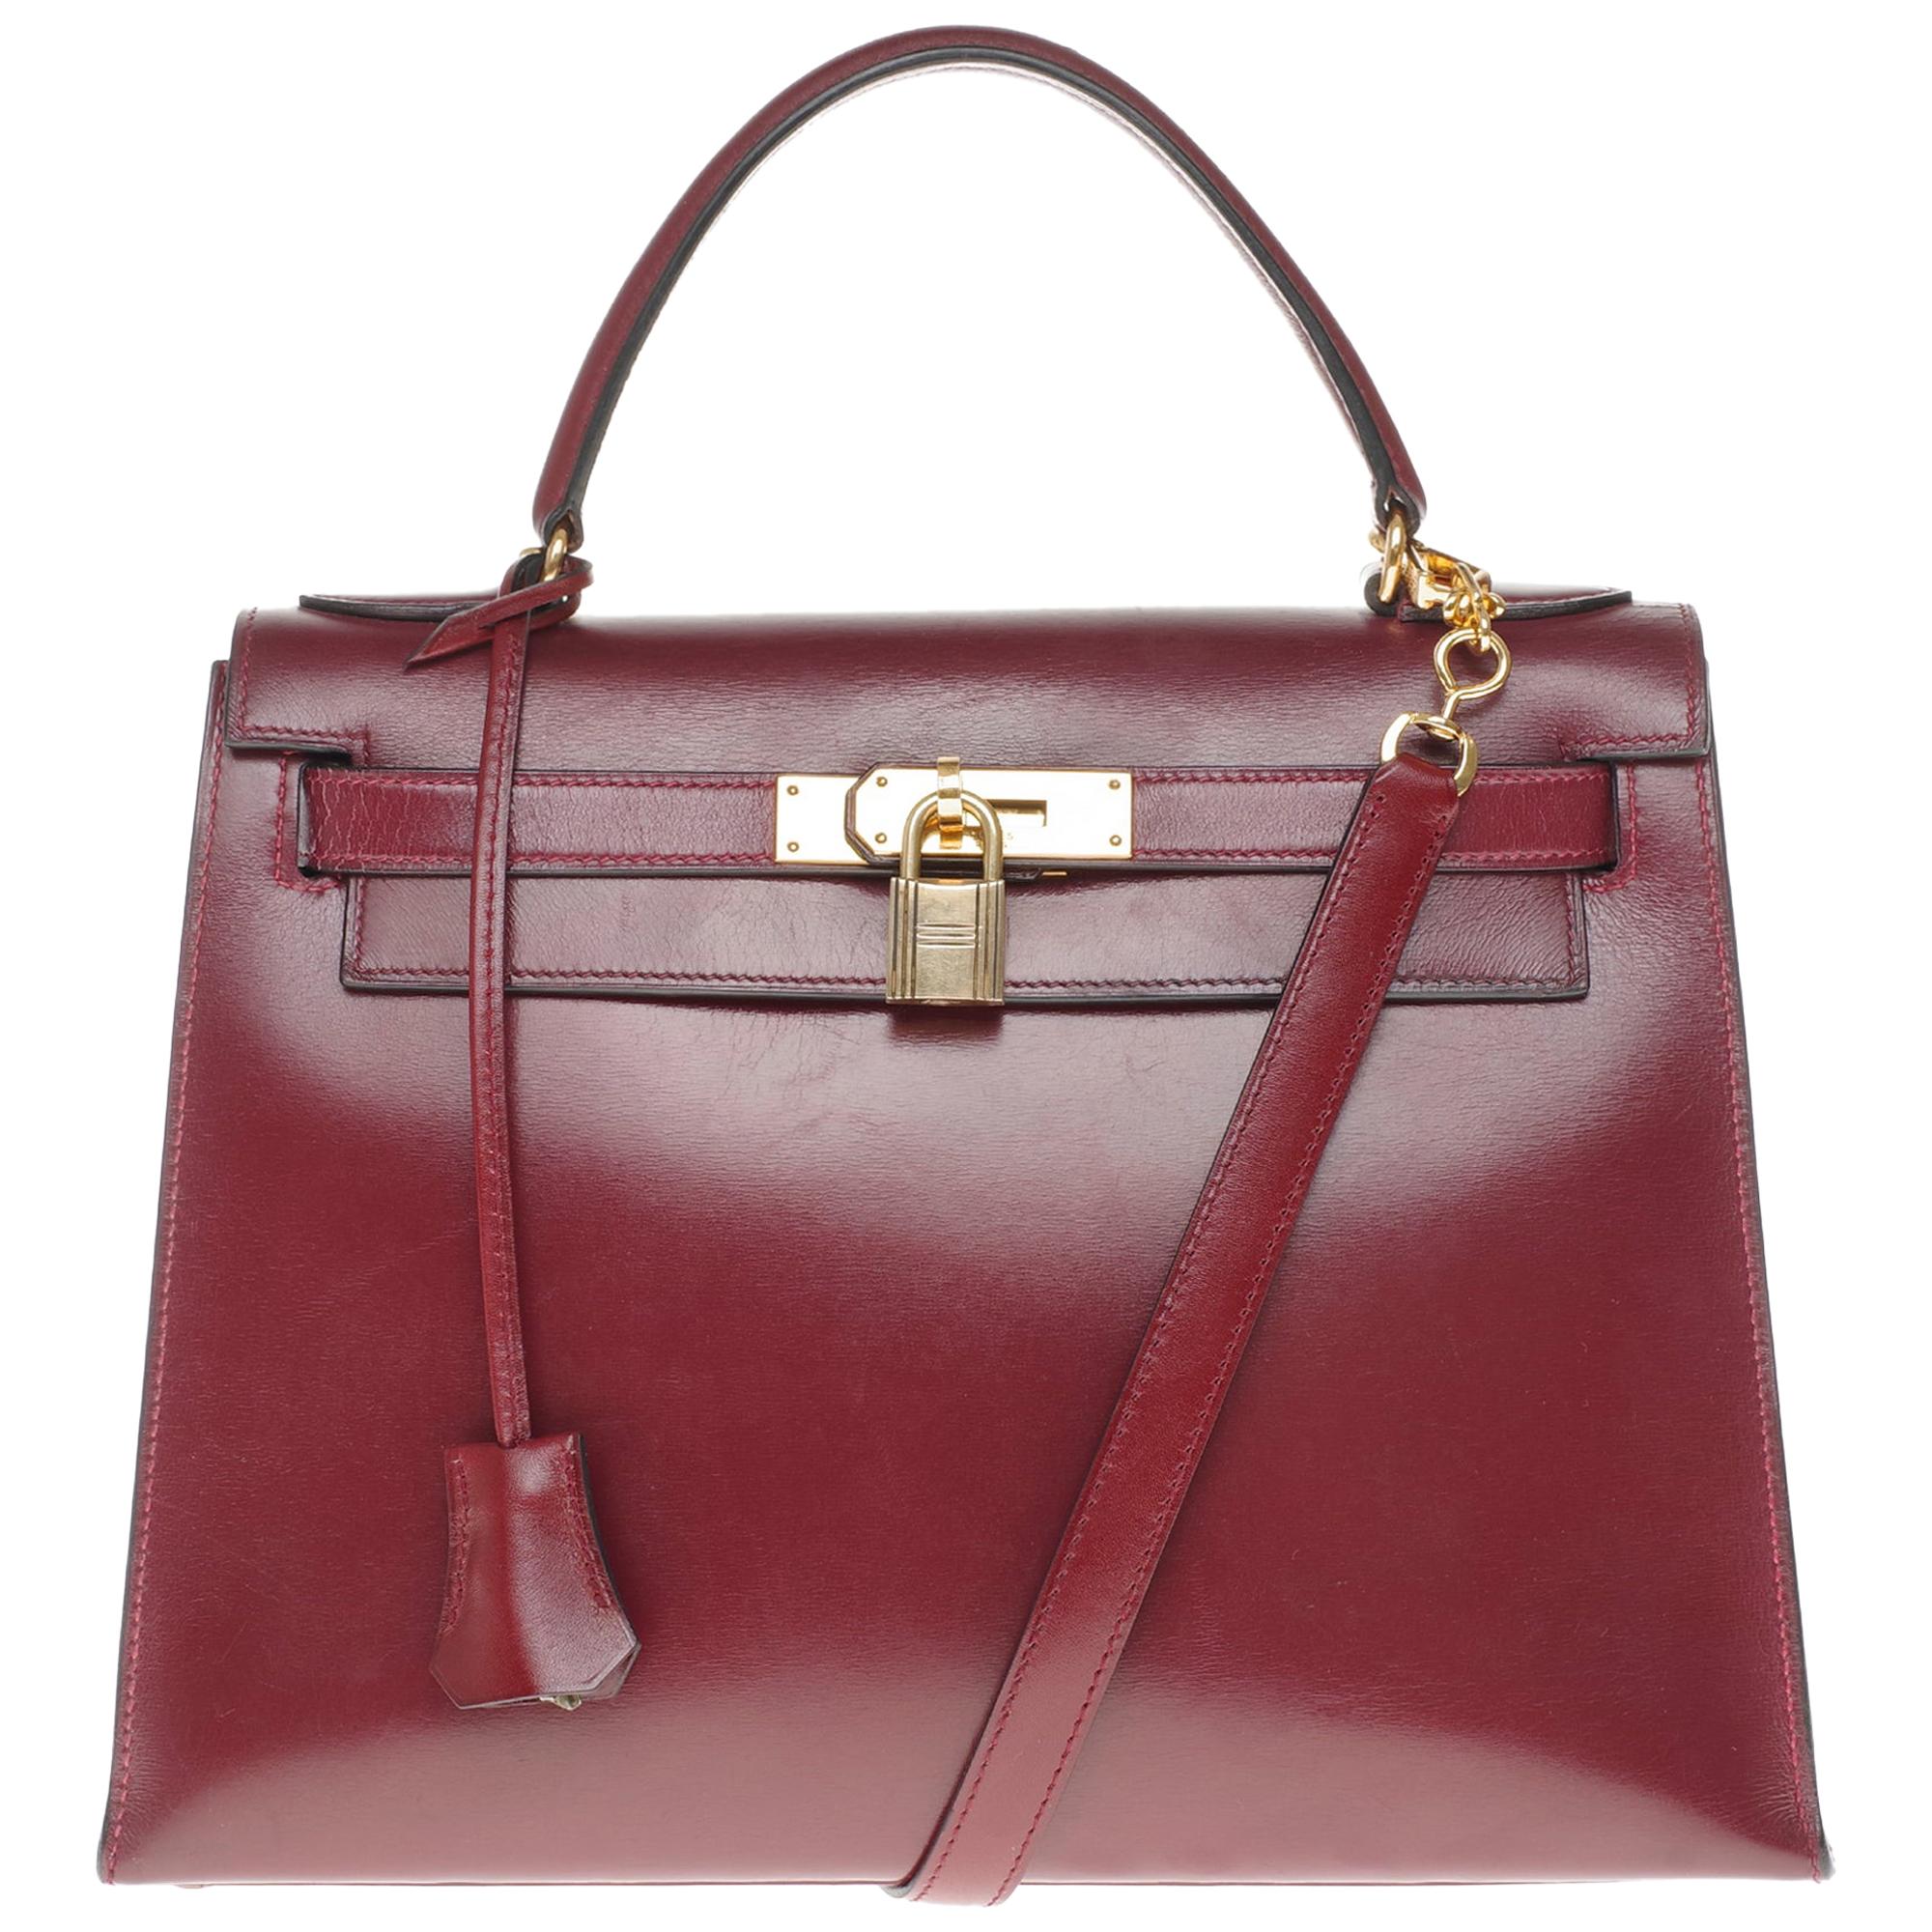 Hermès Kelly 28cm sellier with strap handbag in burgundy calfskin, Gold hardware